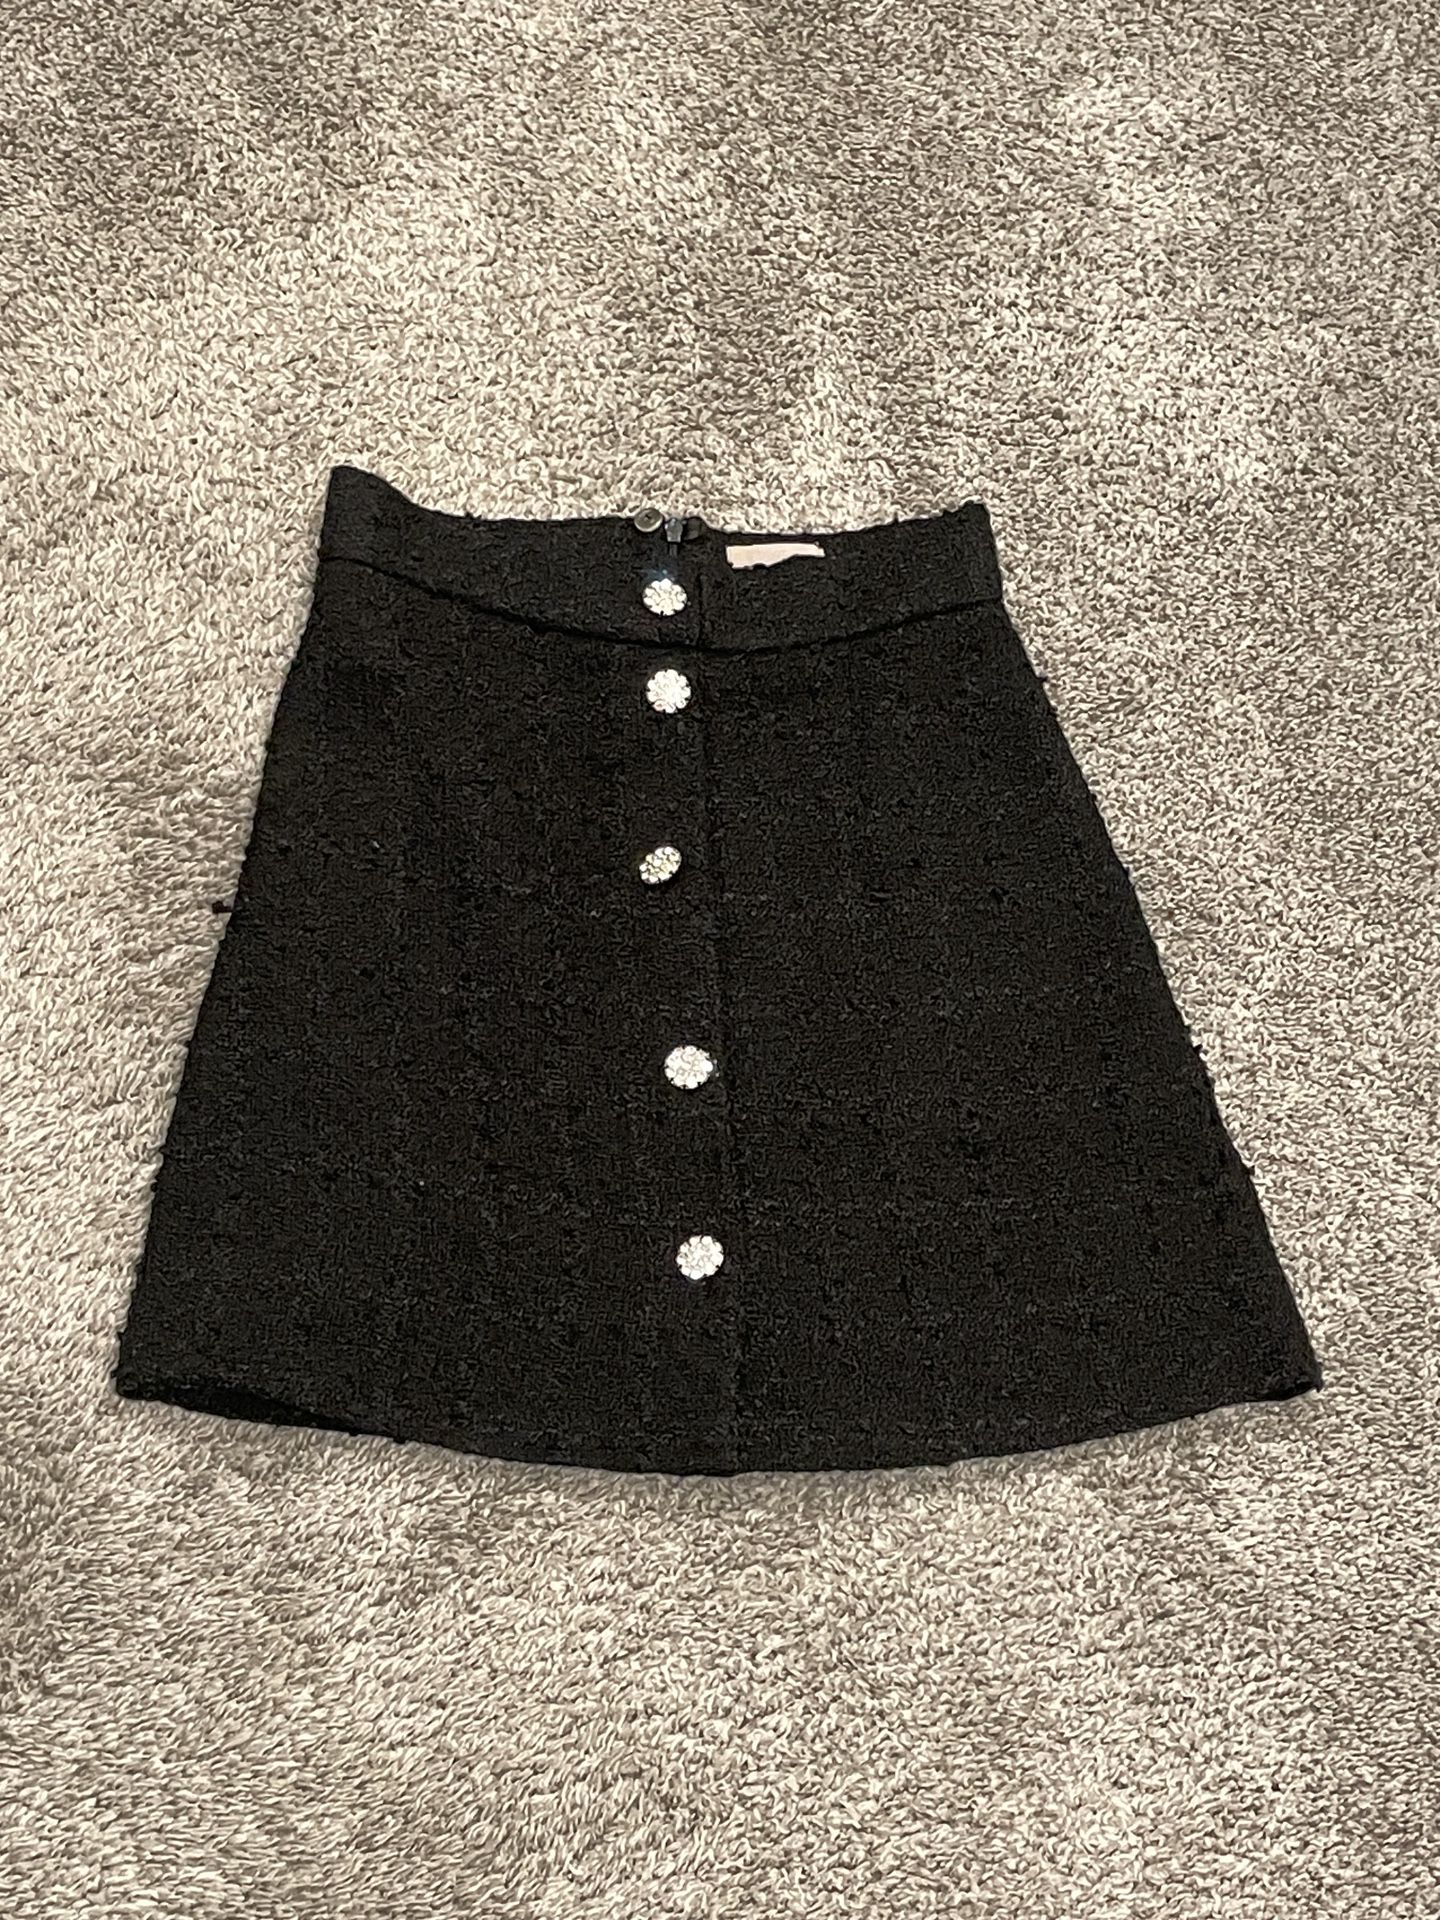 NWOT H&M Size 2 Black Fashion Skirt